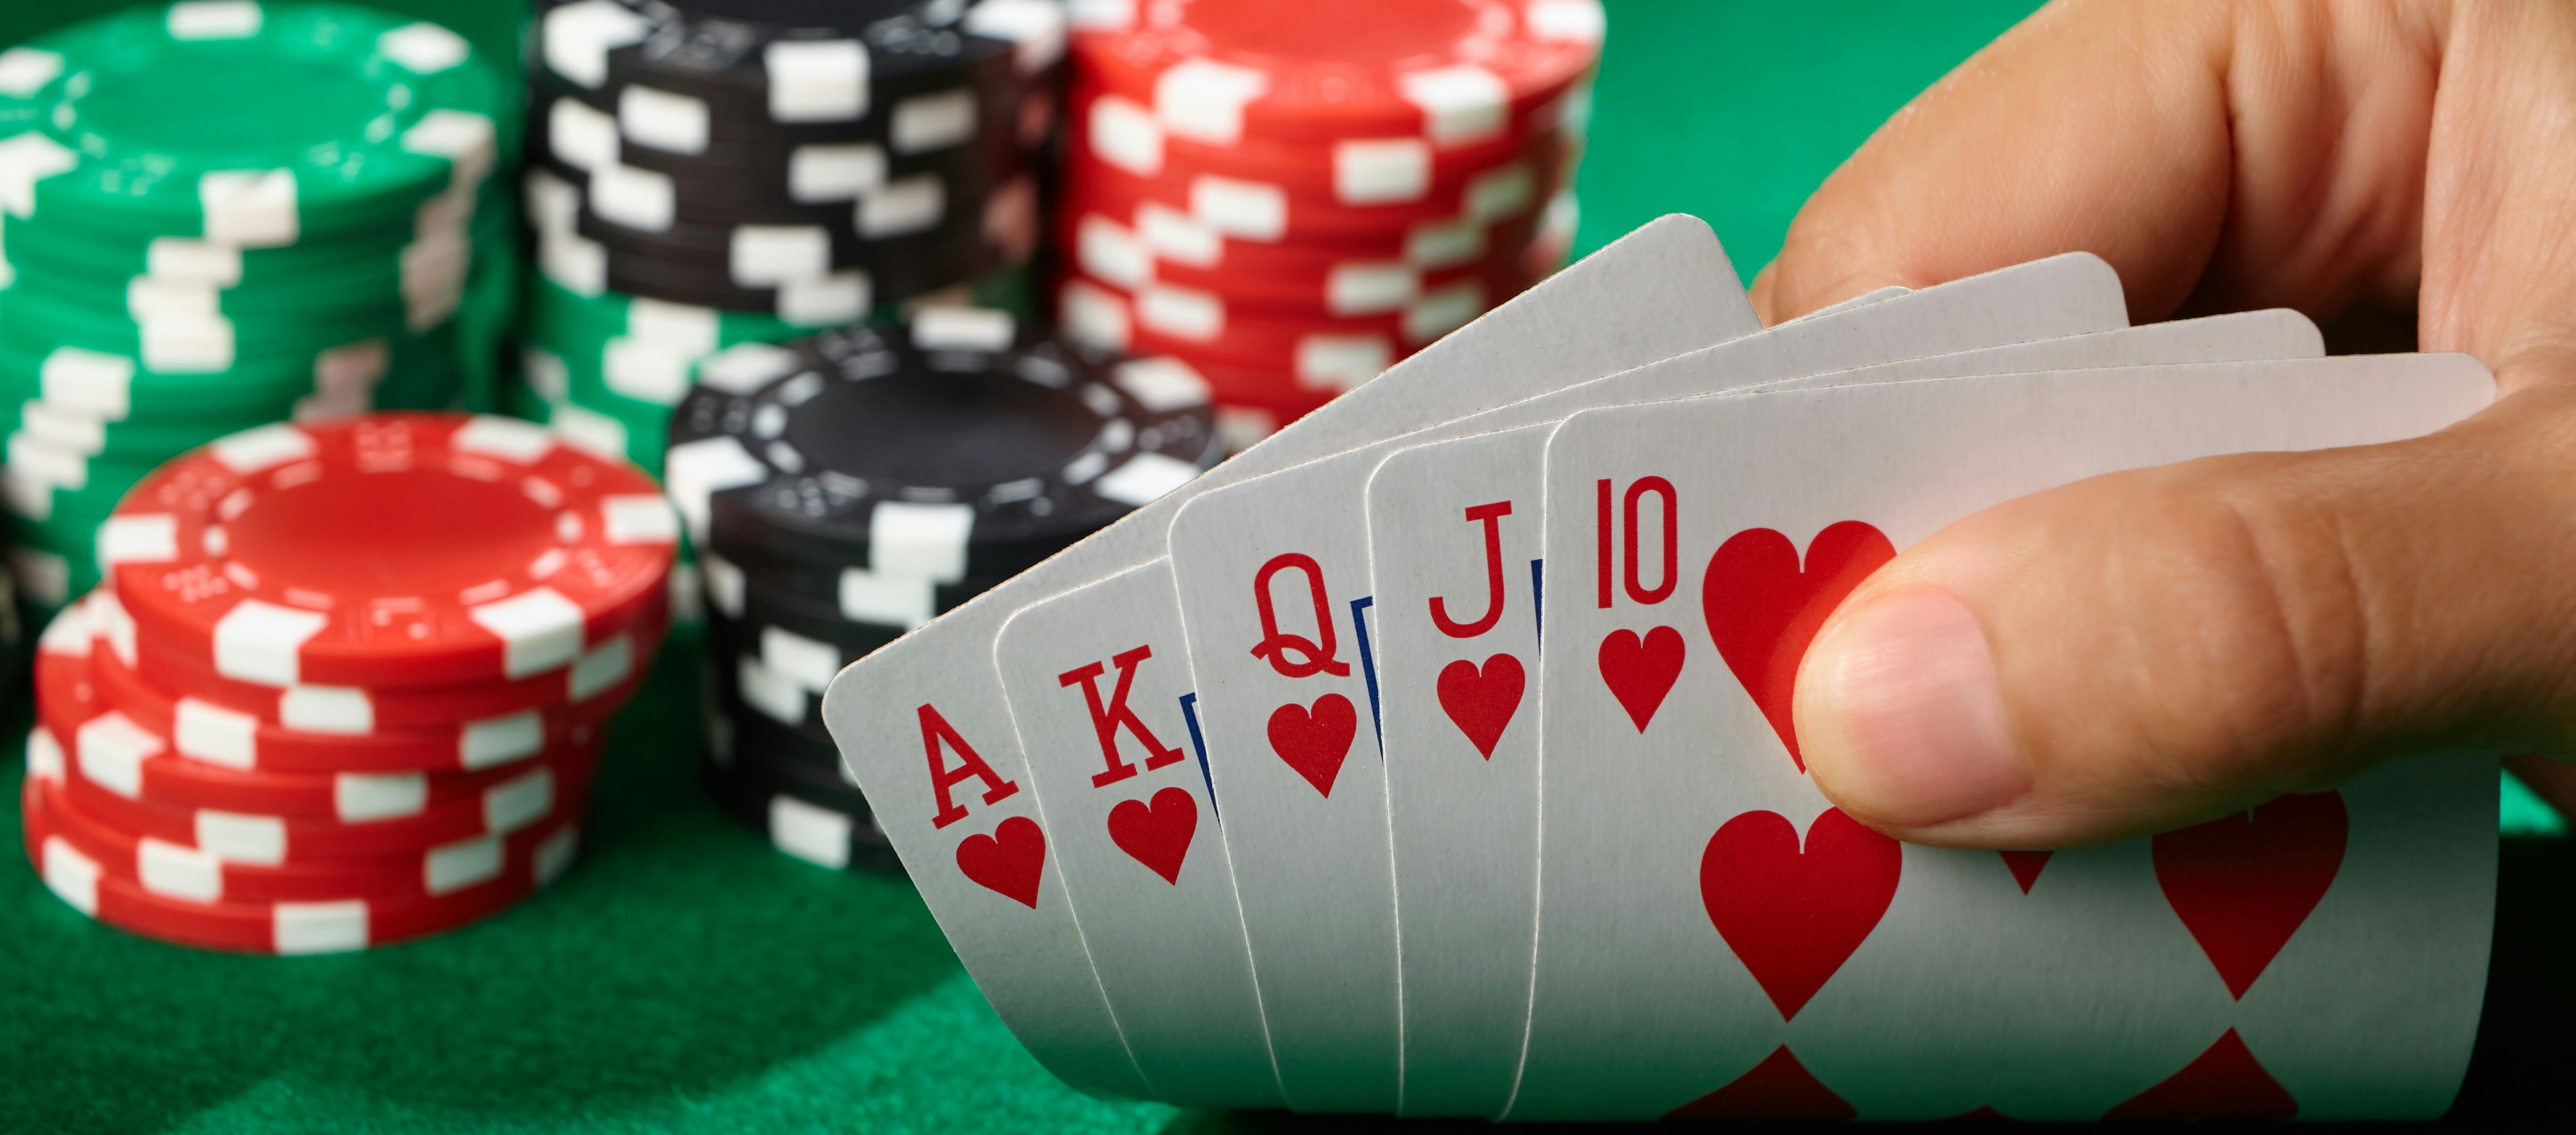 Royal Flush in video poker How to beat the dealer’s hand Blog